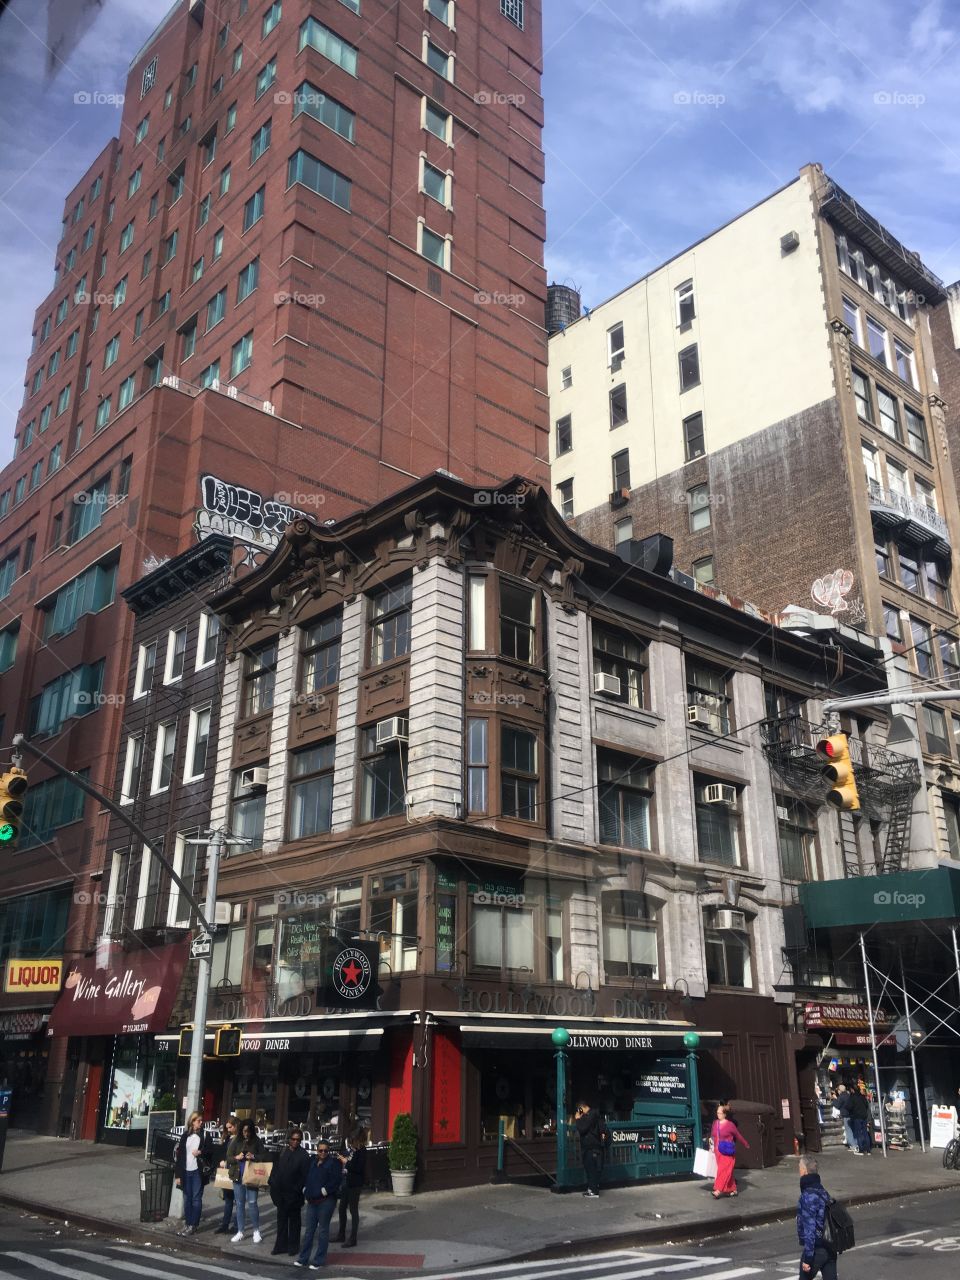 Buildings in New York City 